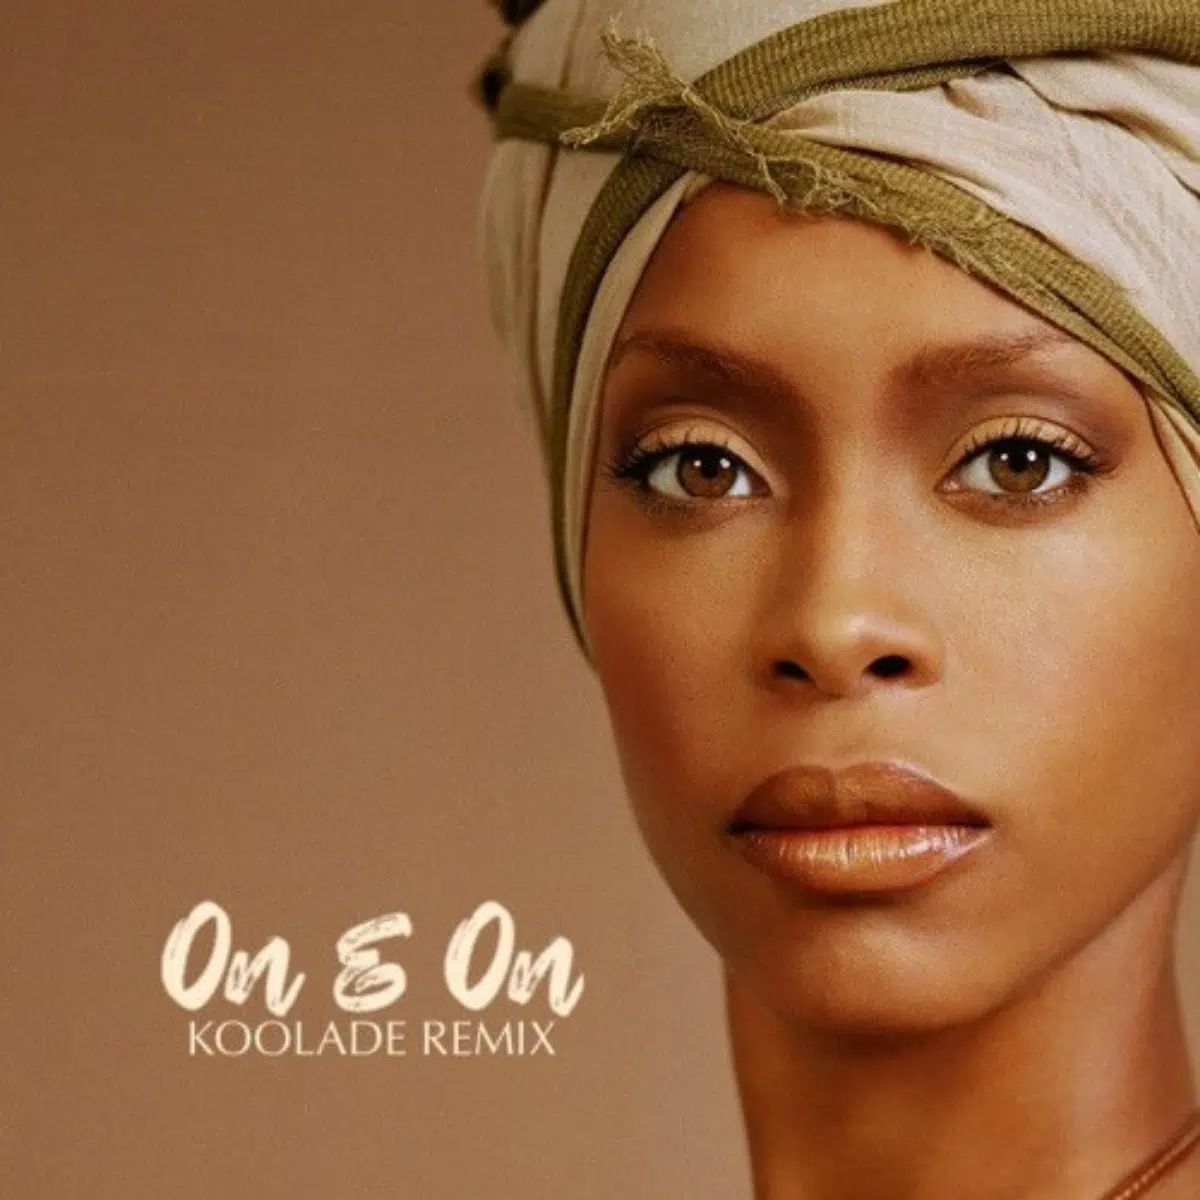 DOWNLOAD: Erykah Badu – “On & On” (Koolade Remix) Video + Audio Mp3